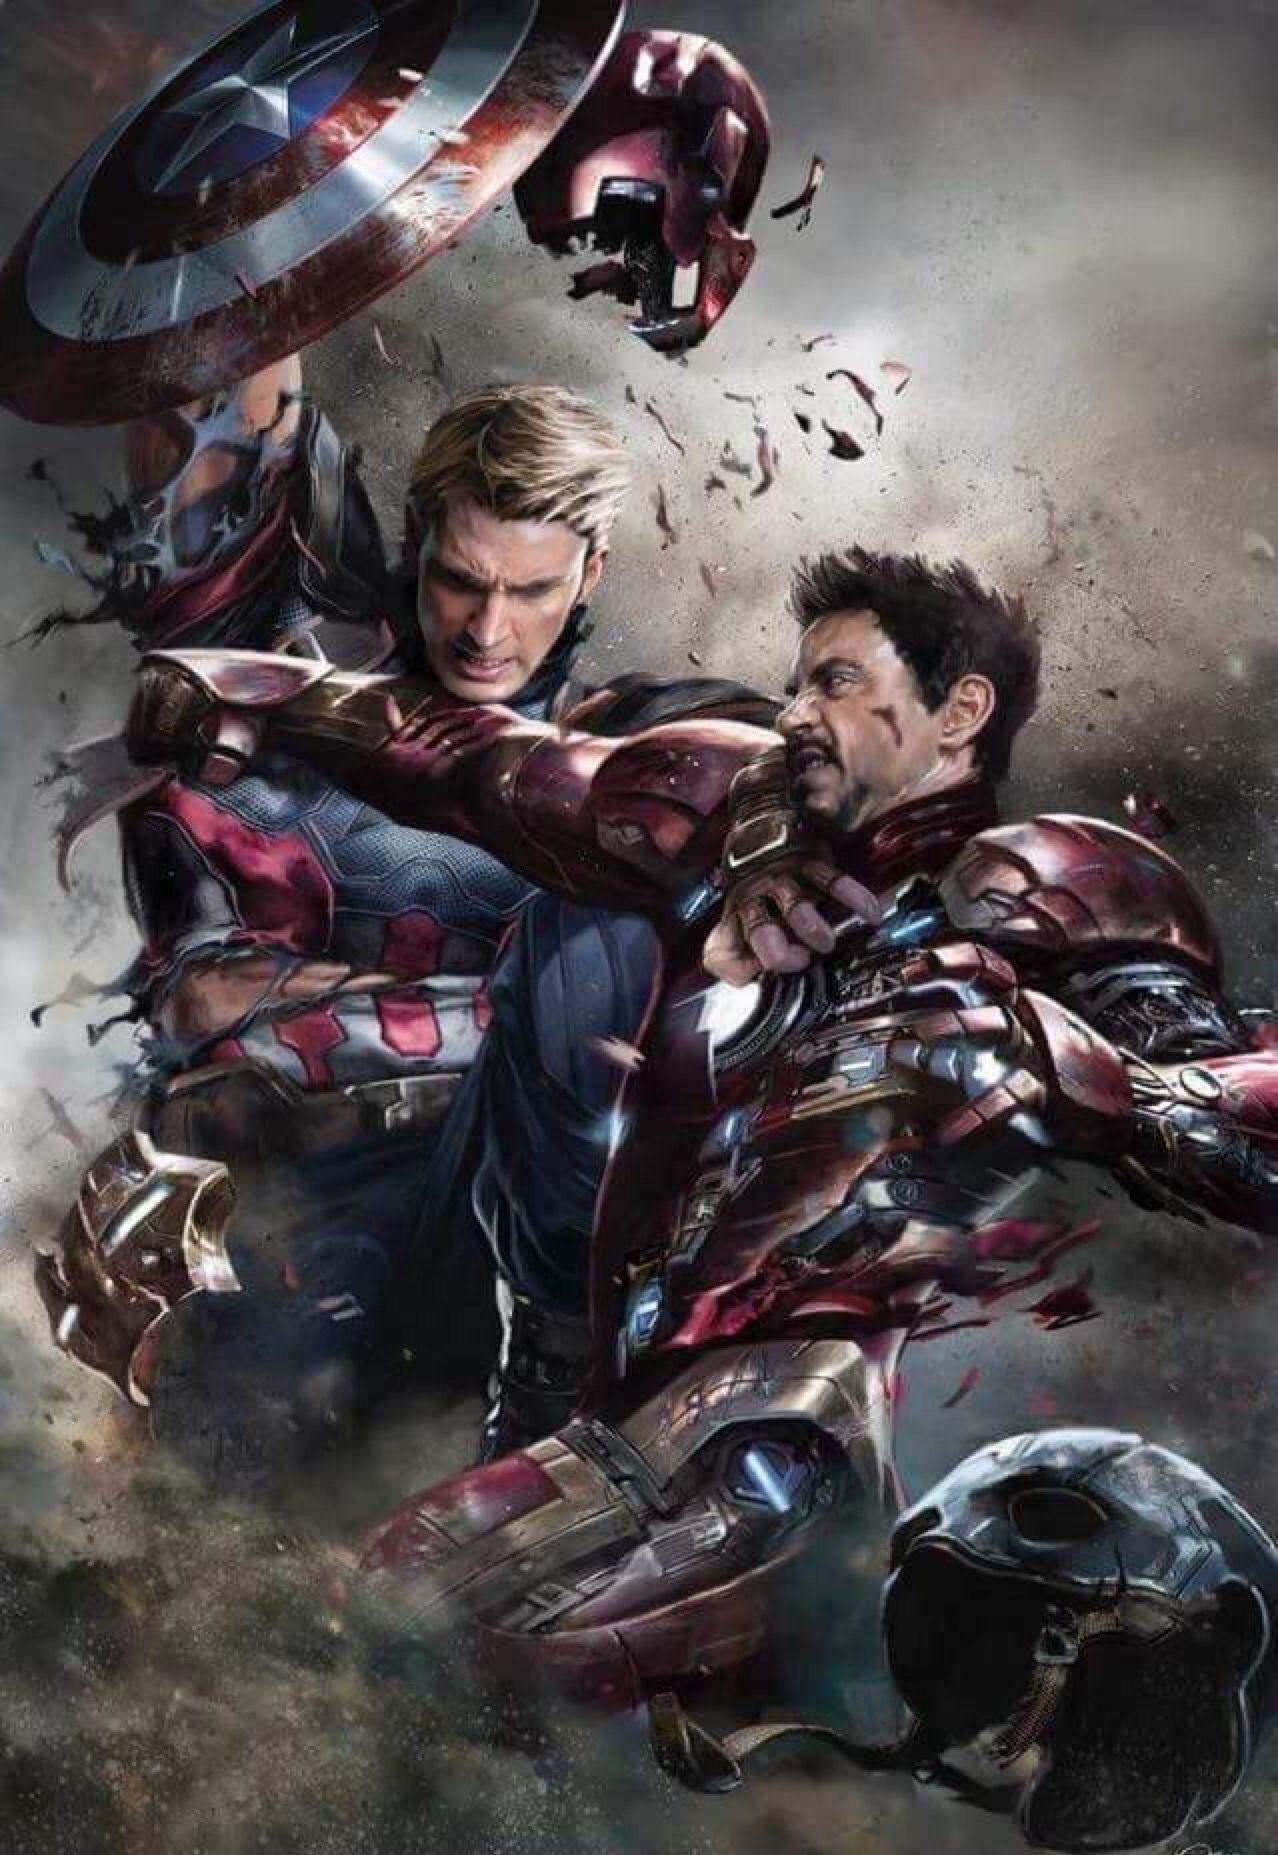 mcu and comics. Iron man vs captain america, Marvel, Marvel superheroes